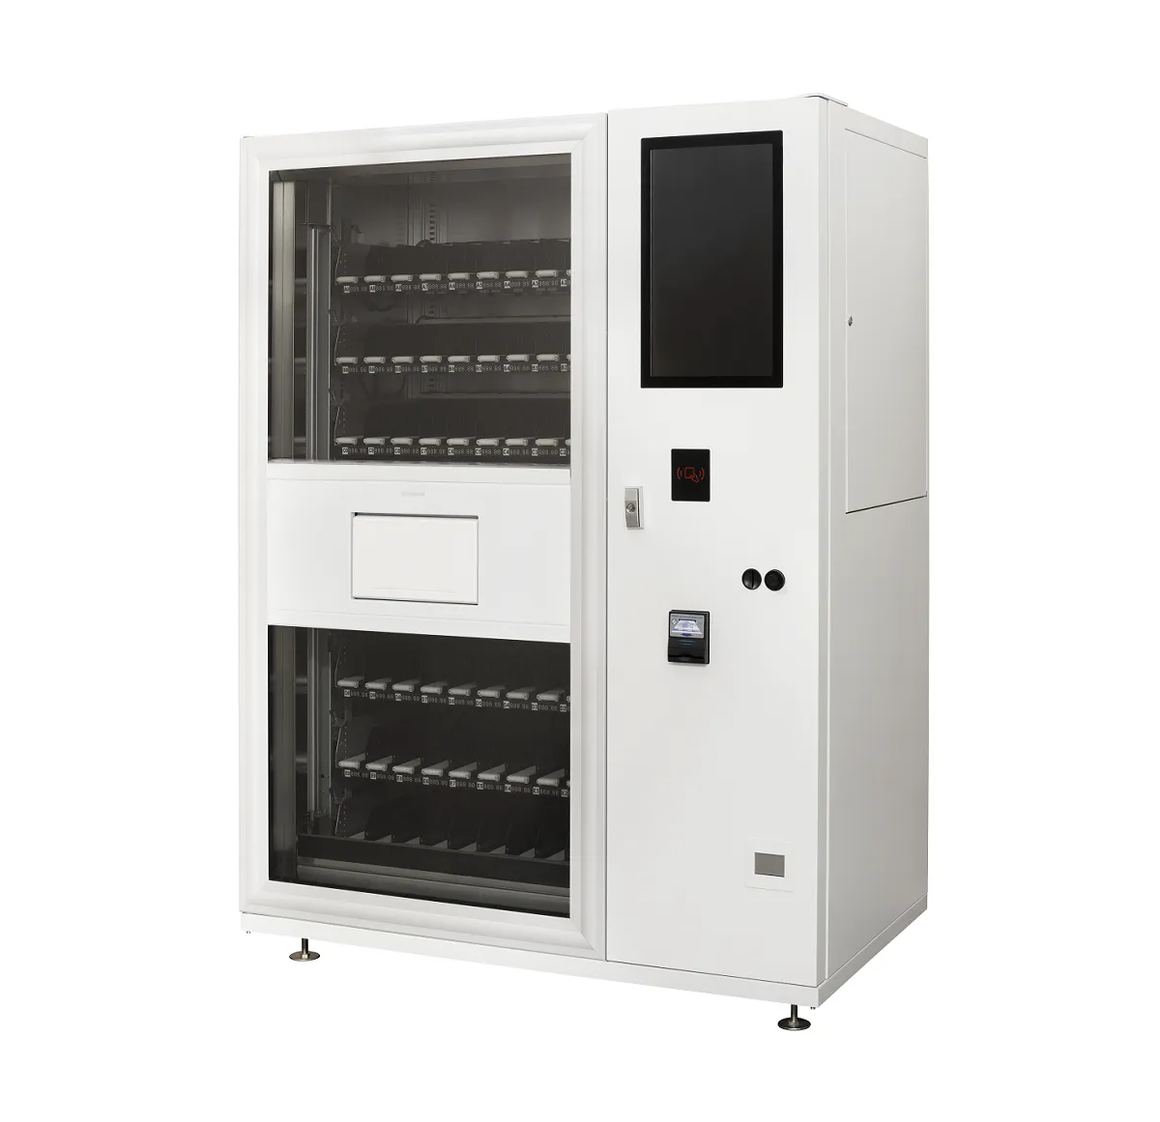 Lemgo vending machine plain